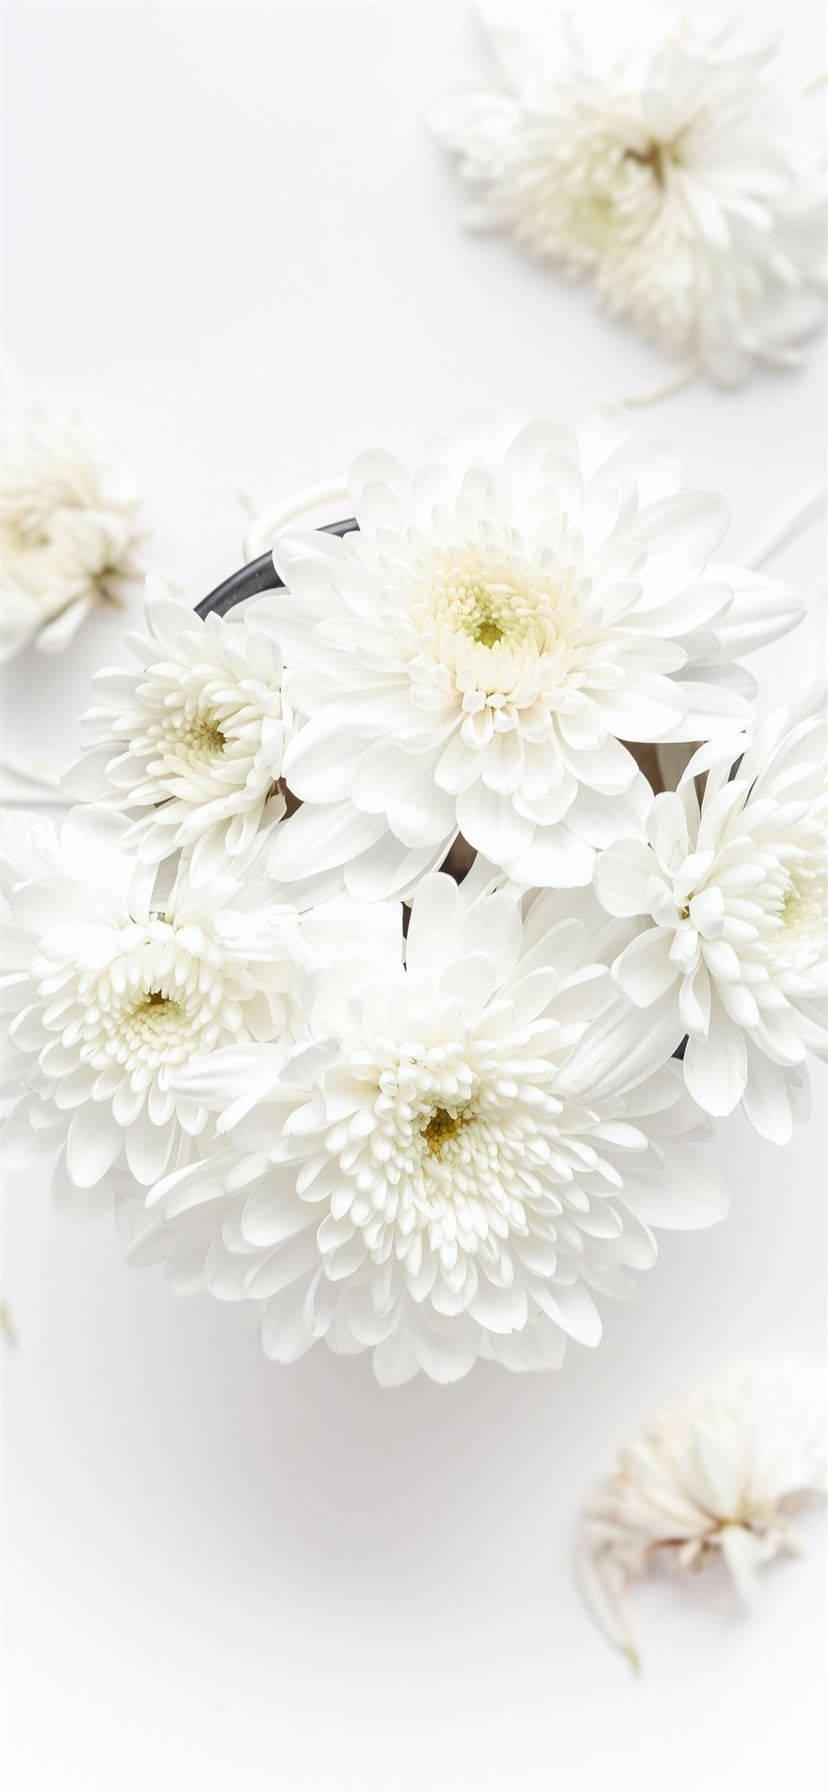 White Chrysanthemum Iphone Wallpaper